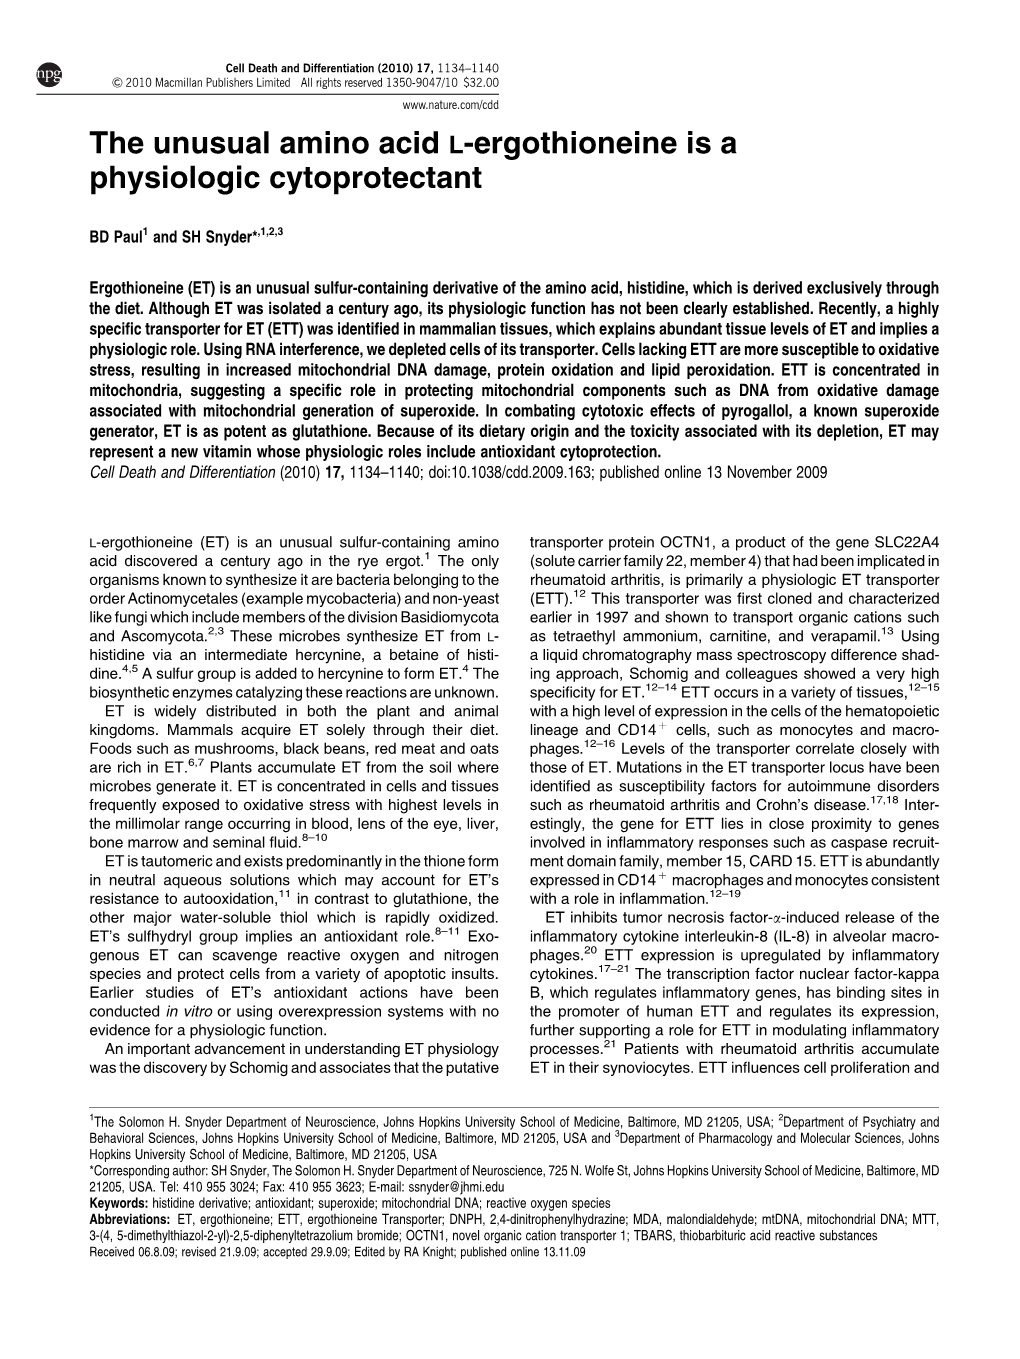 The Unusual Amino Acid L-Ergothioneine Is a Physiologic Cytoprotectant